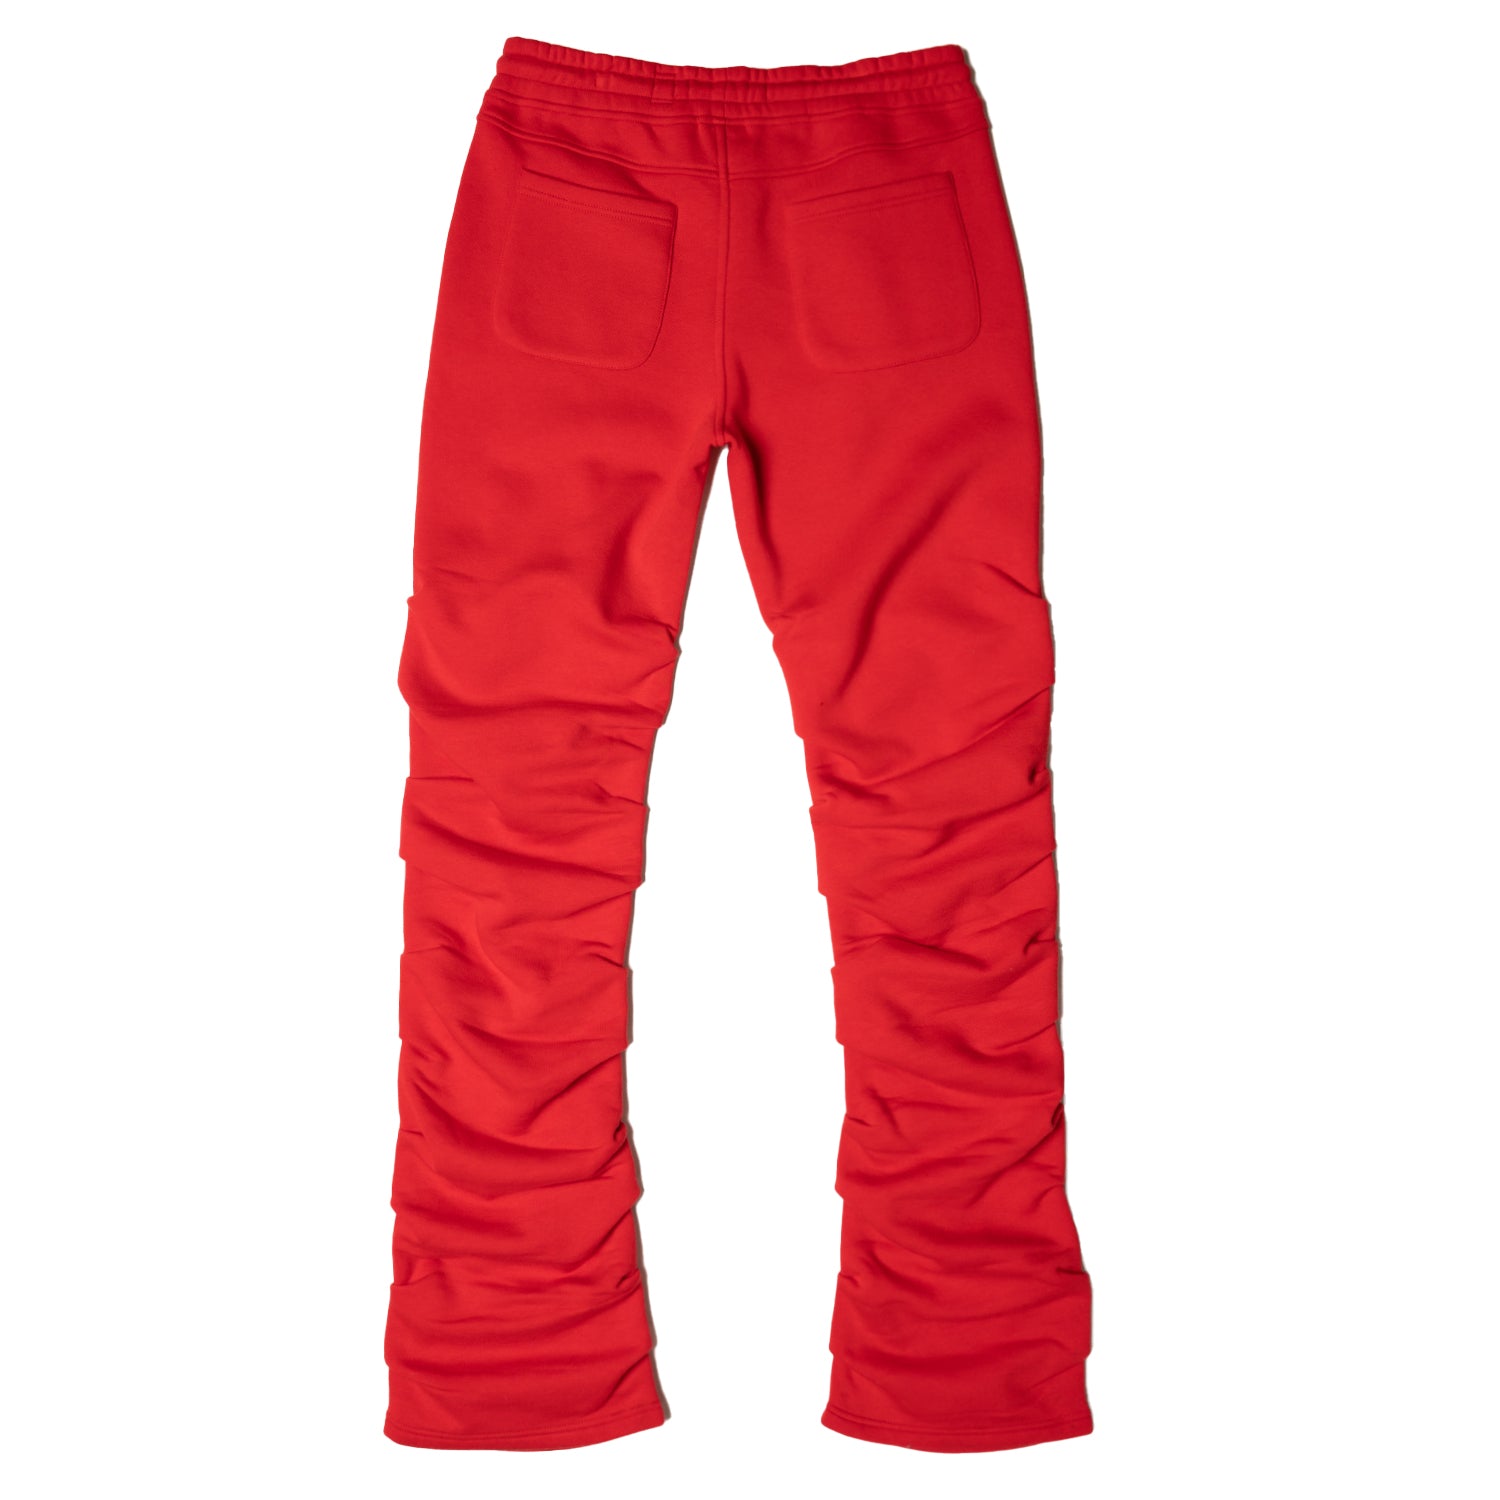 F6220 Malik Stacked Sweatpants - Red